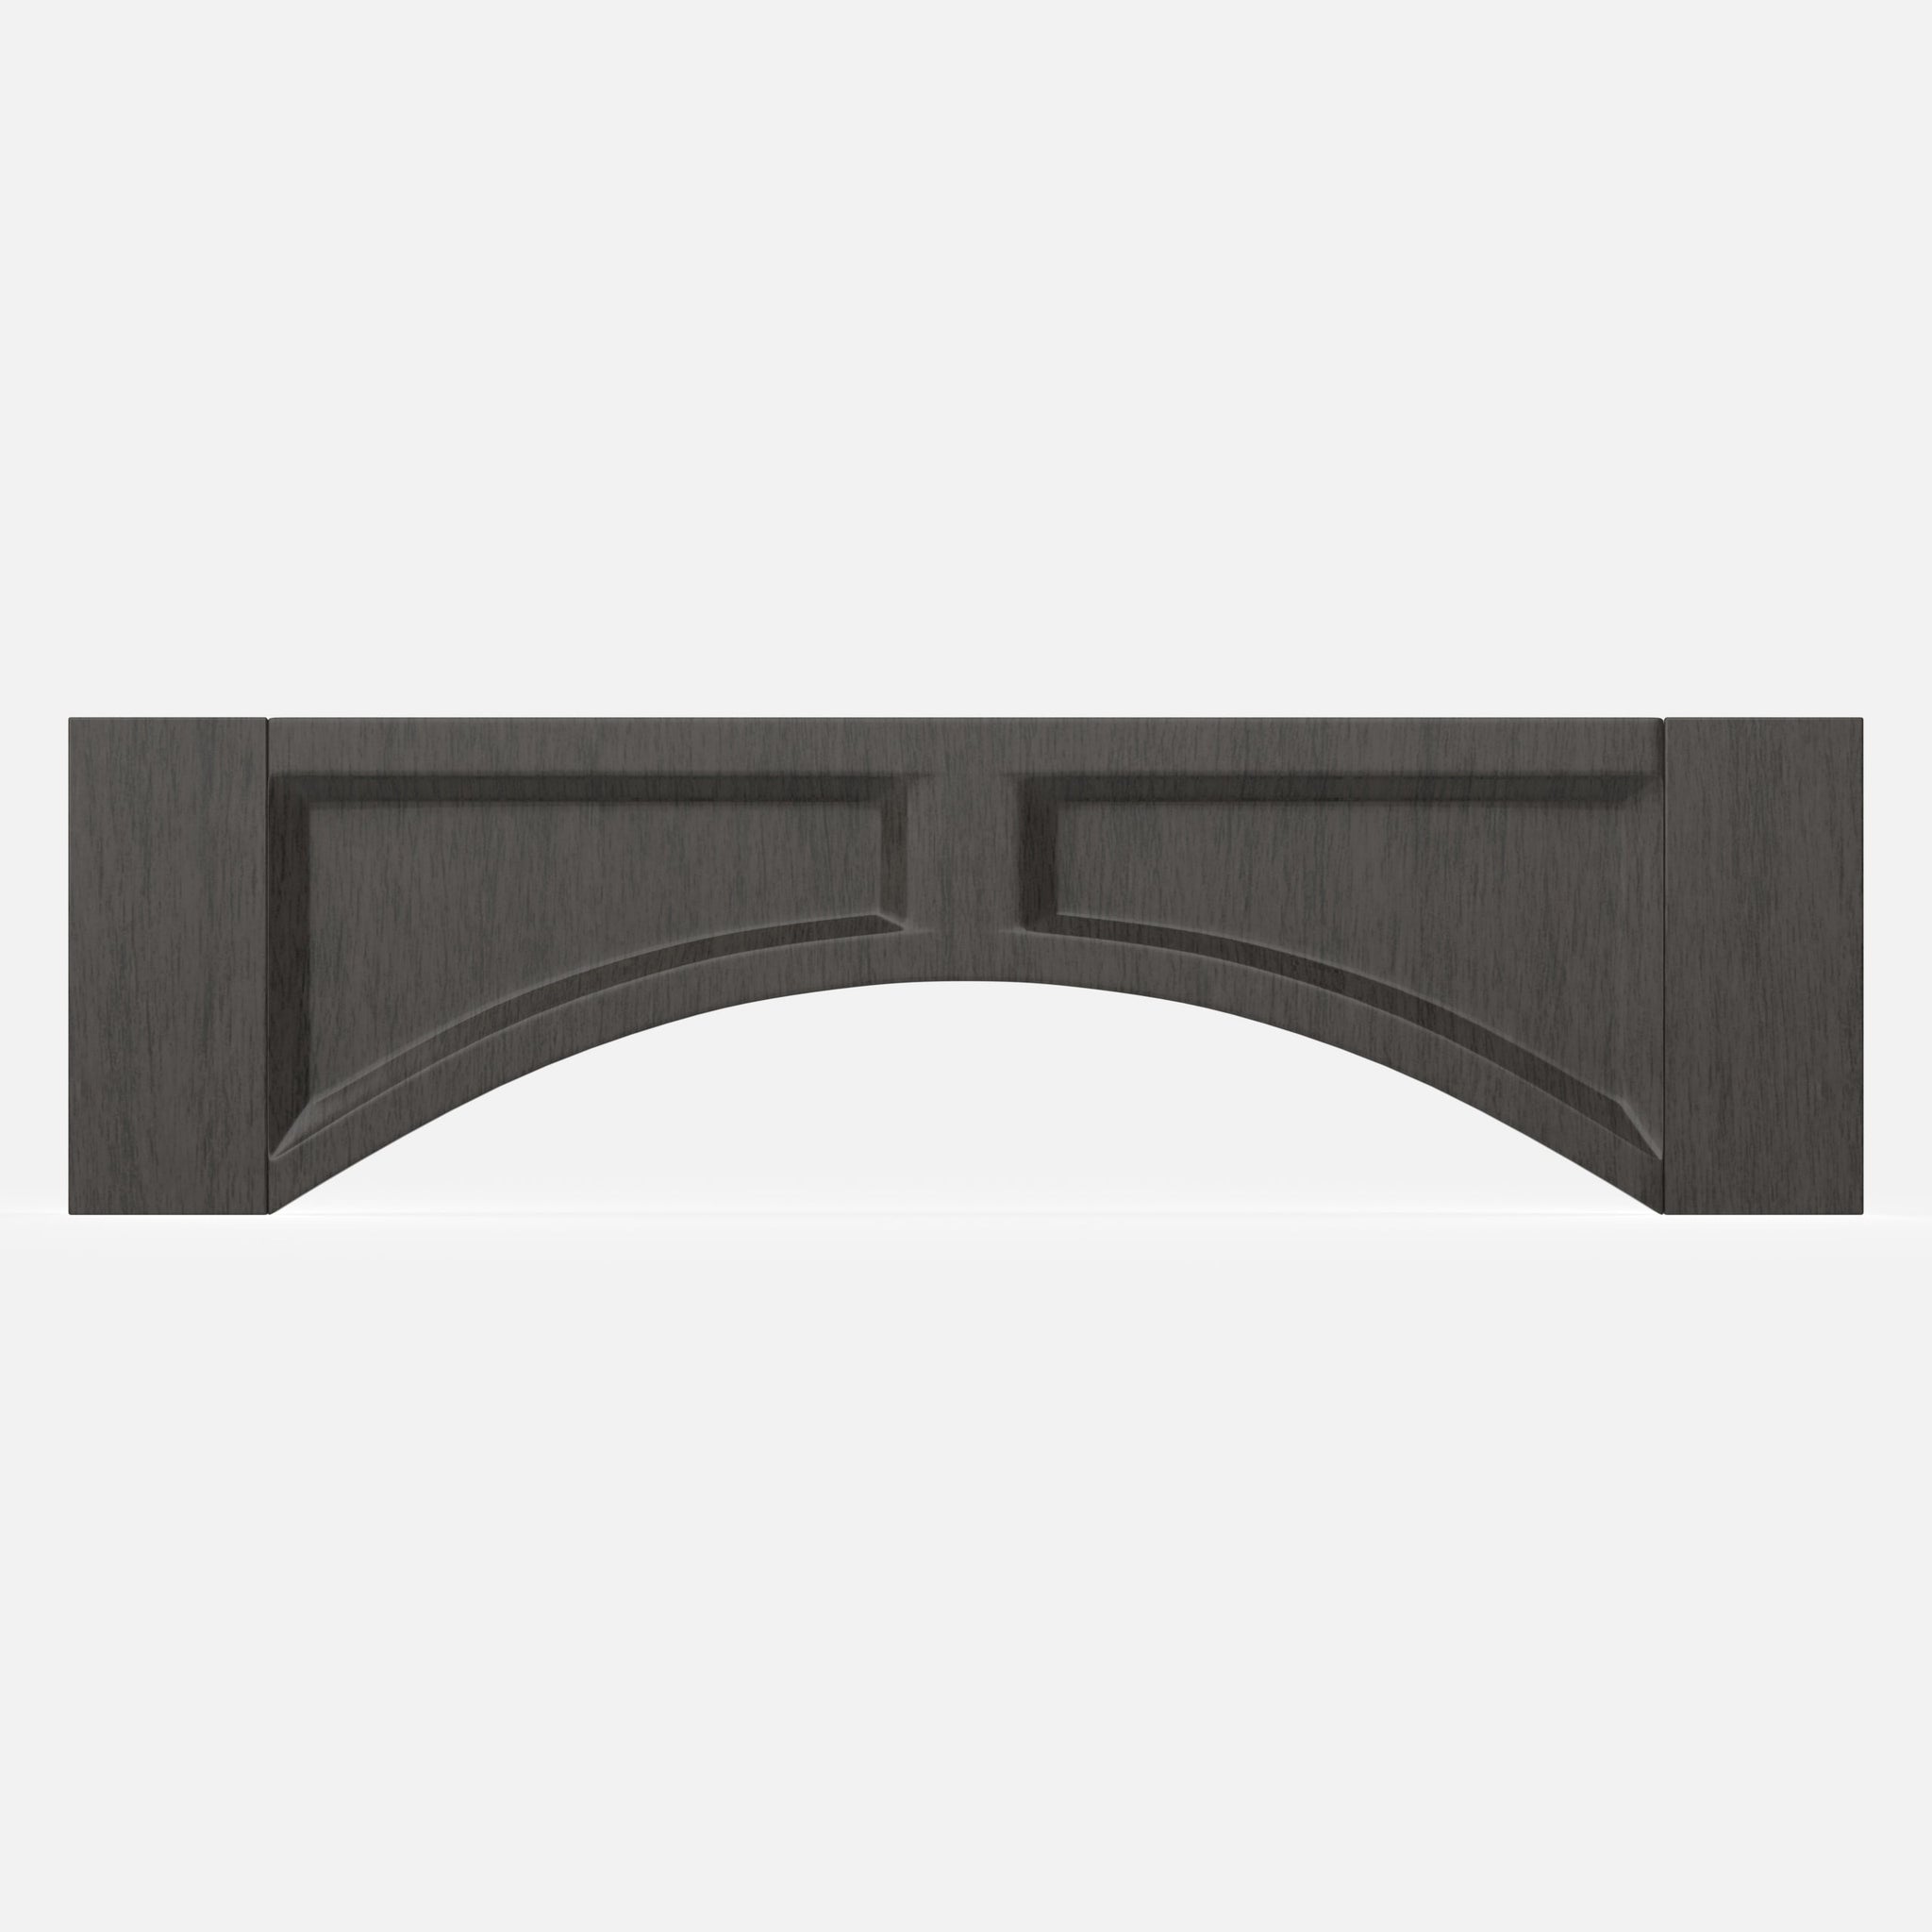 RTA - Elegant Smoky Grey - Arched Valance - Flat Panel | 48"W x 10"H